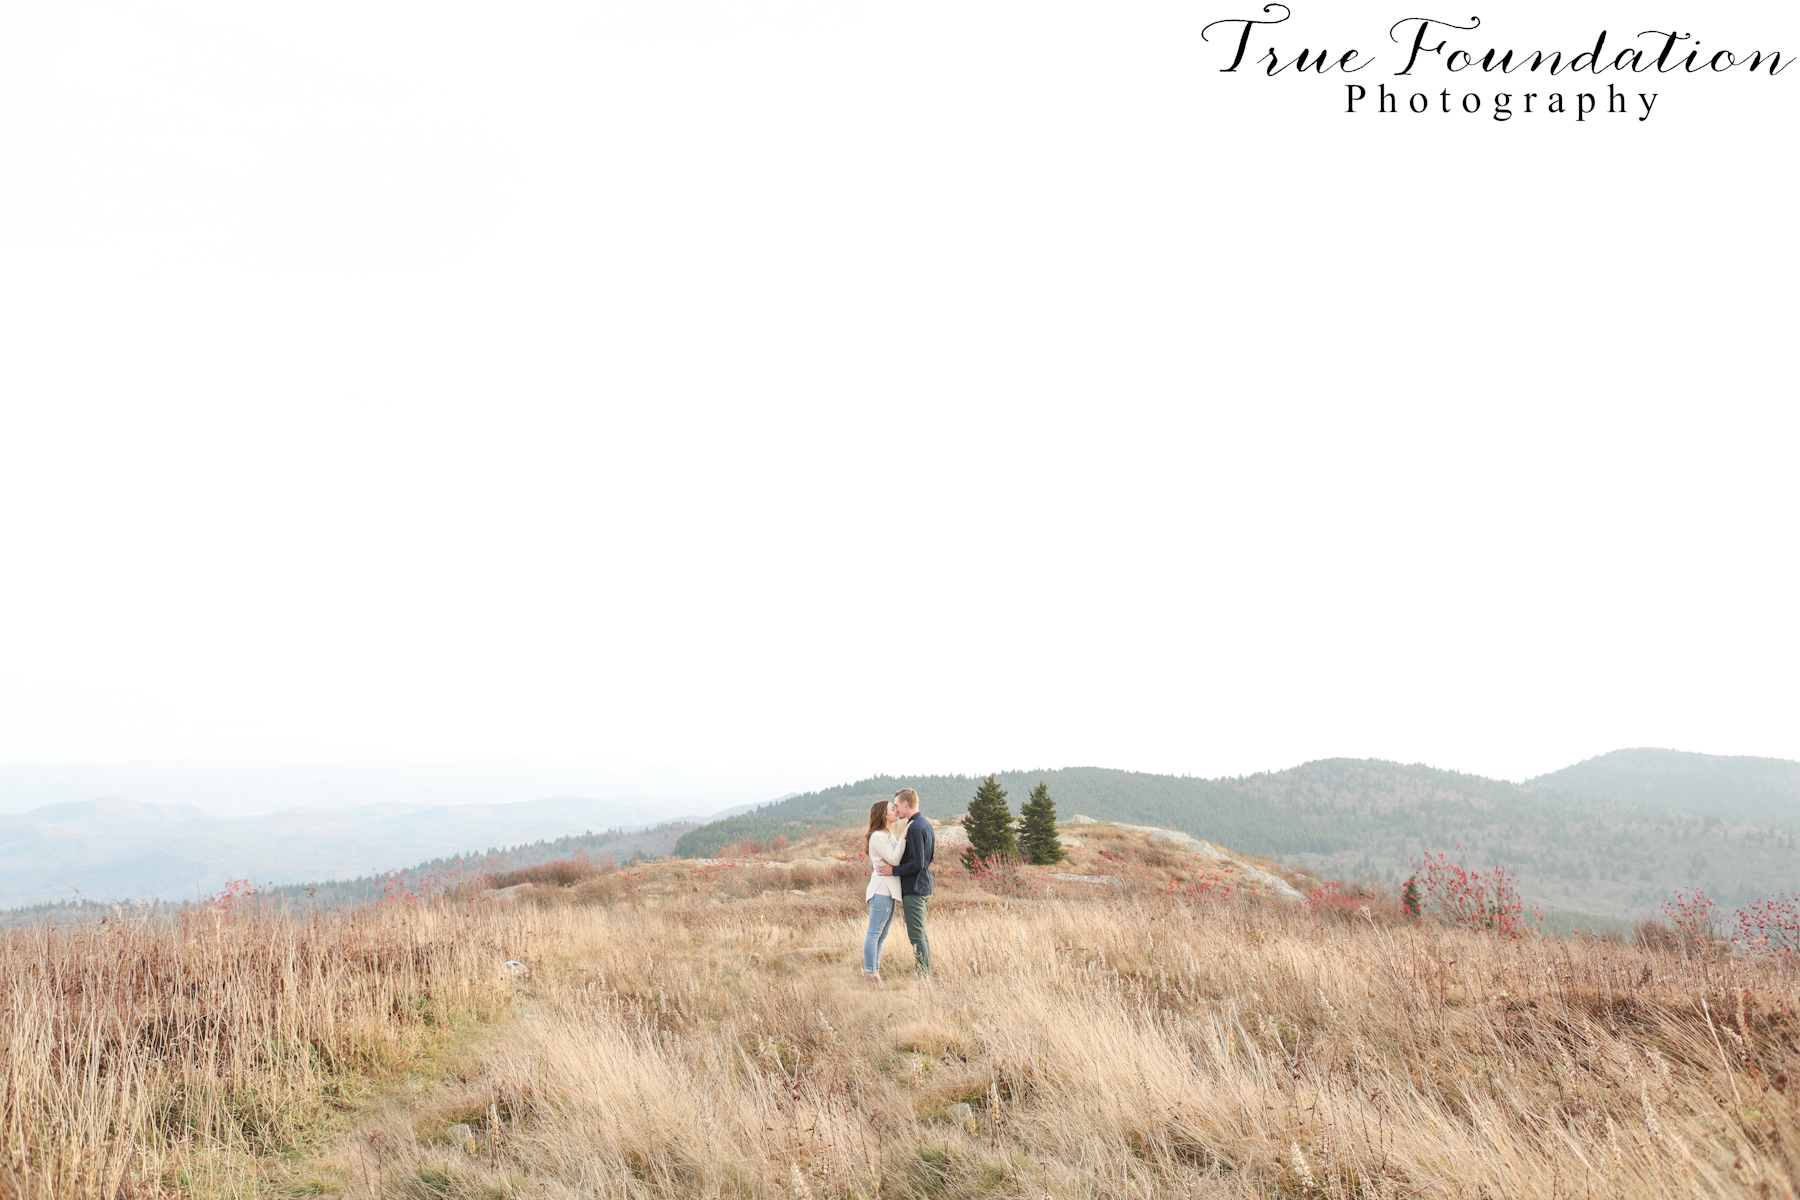 black-balsam-knob-nc-photographer-wedding-engagement-photography-photos-asheville-hendersonville-mountain-engagement-anniversary-couple-hiking-12